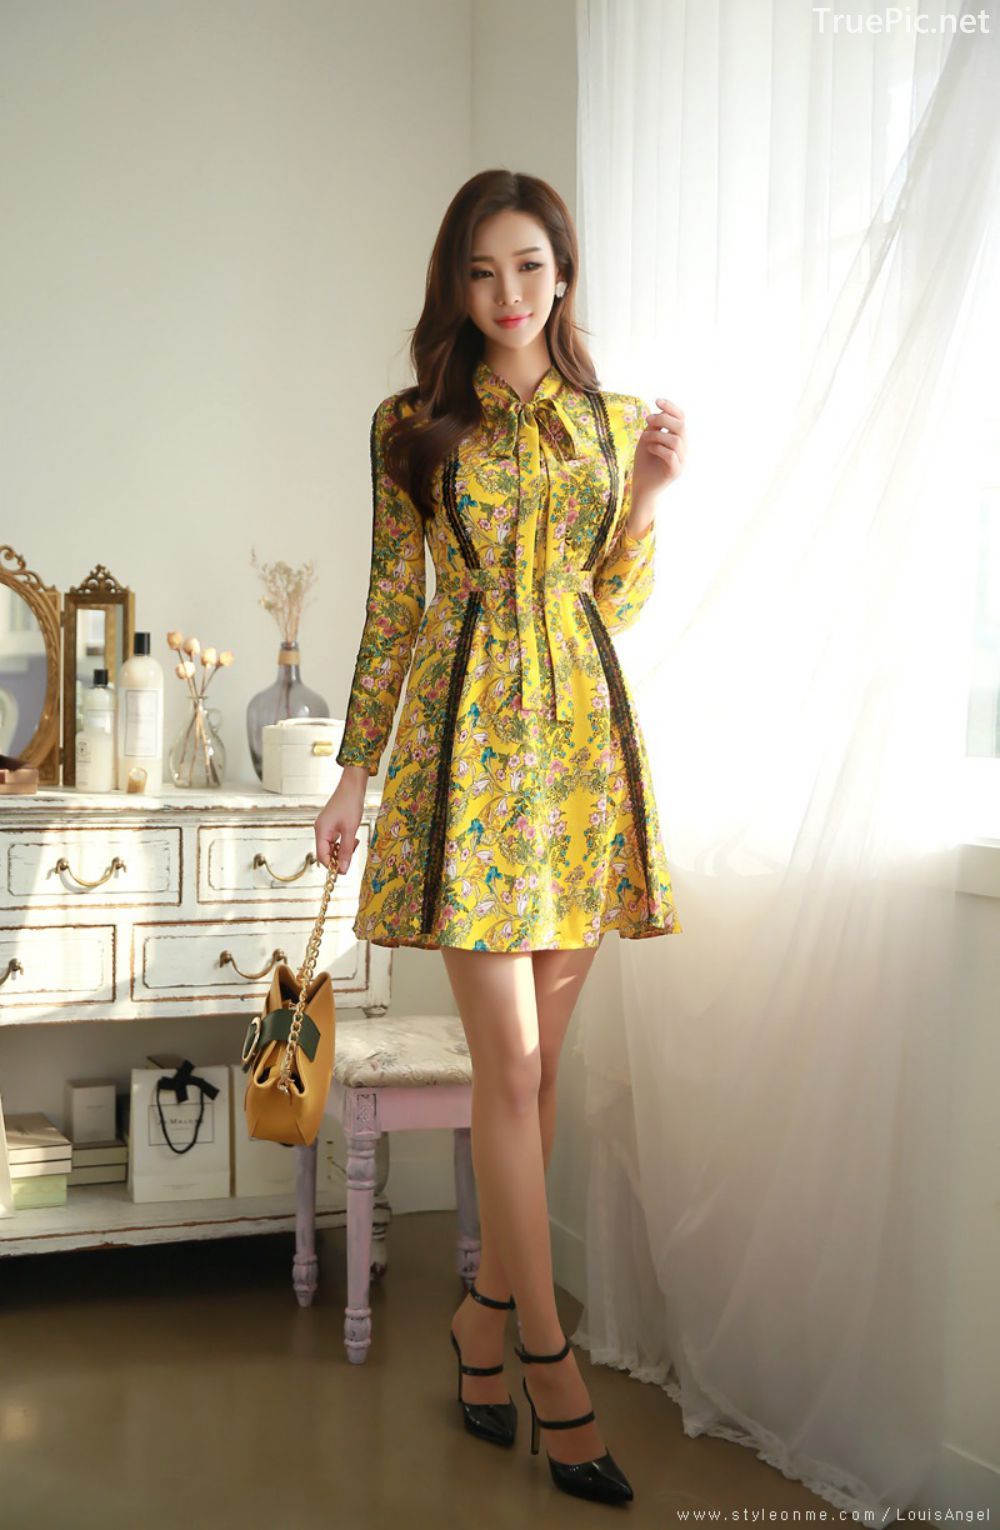 Korean Fashion Model - Park Da Hyun - Indoor Photoshoot Collection - TruePic.net - Picture 26